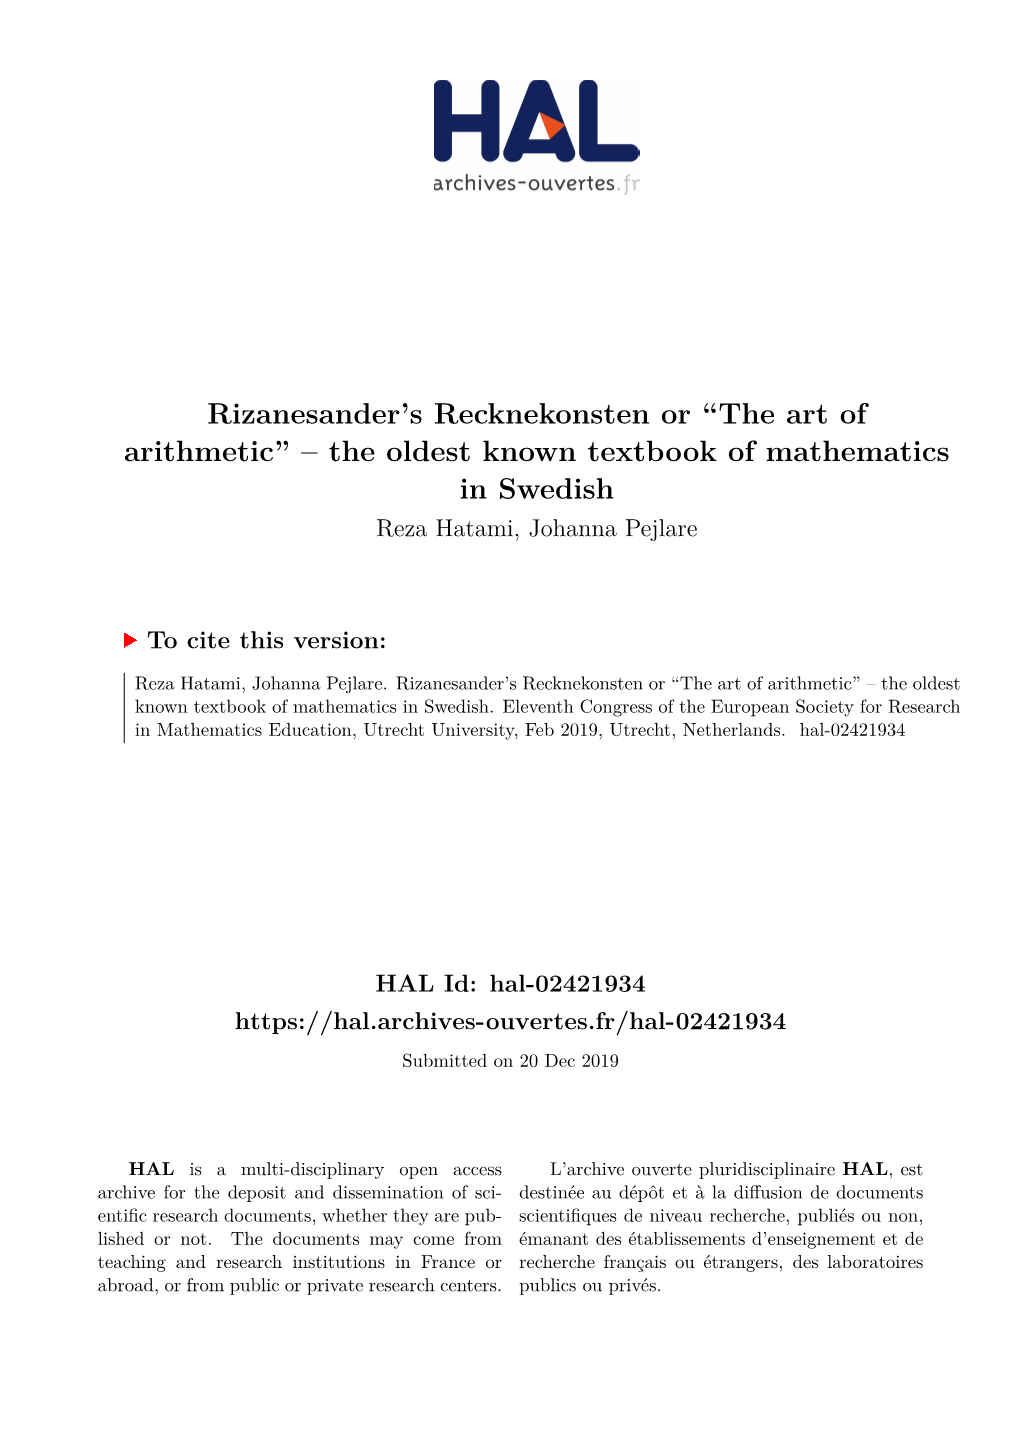 Rizanesander's Recknekonsten Or ``The Art of Arithmetic'